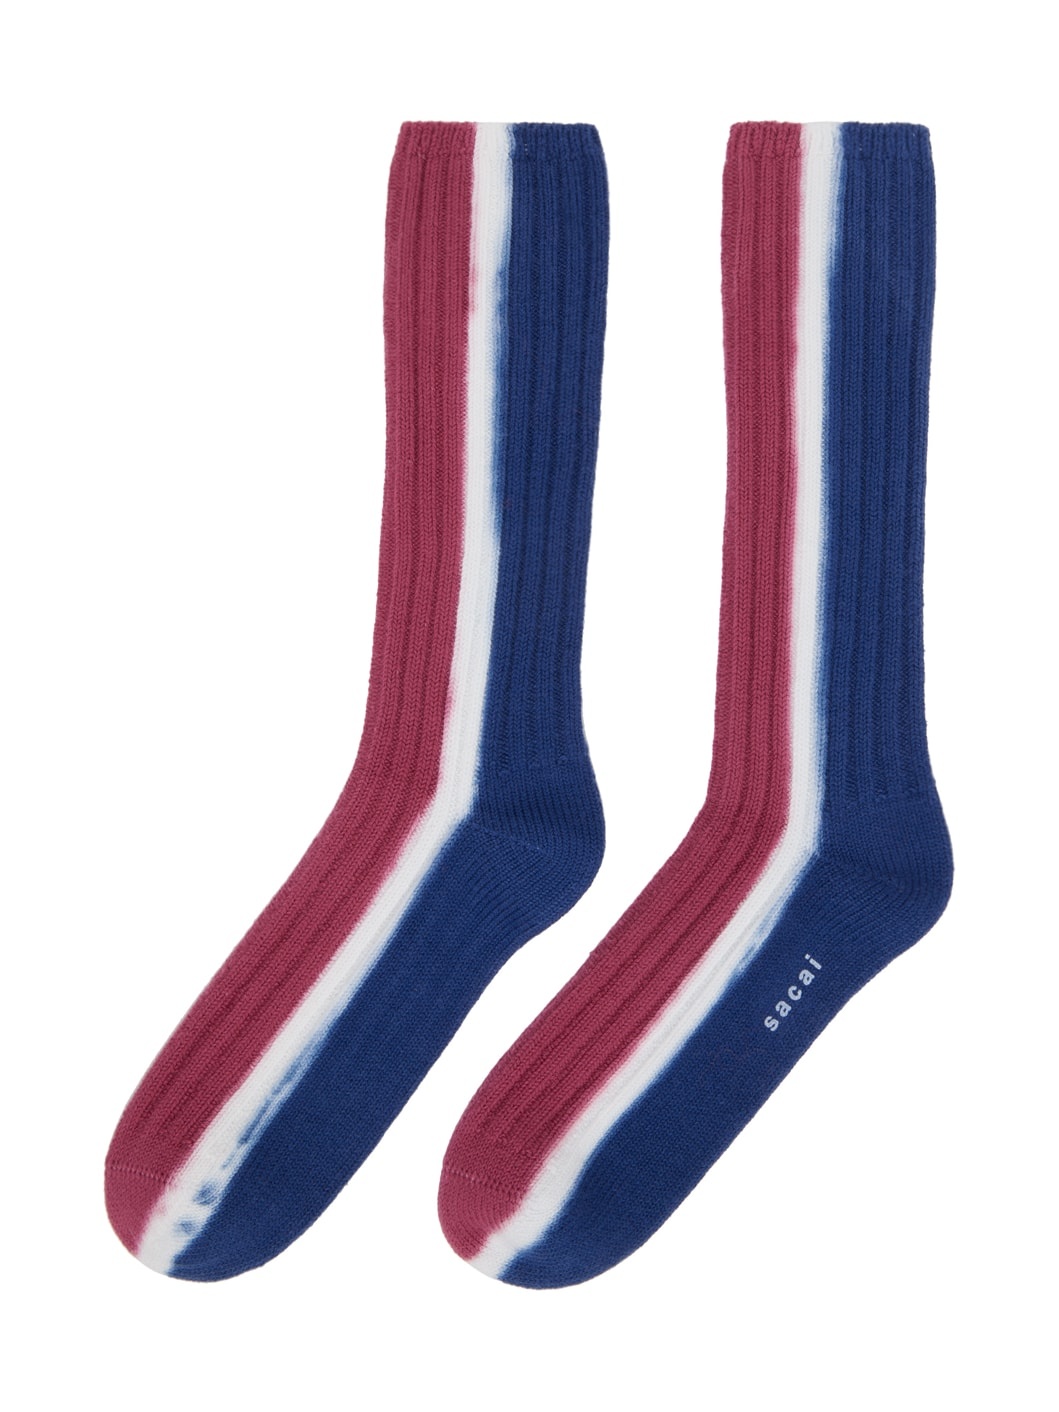 Red & Navy Vertical Dye Socks - 2